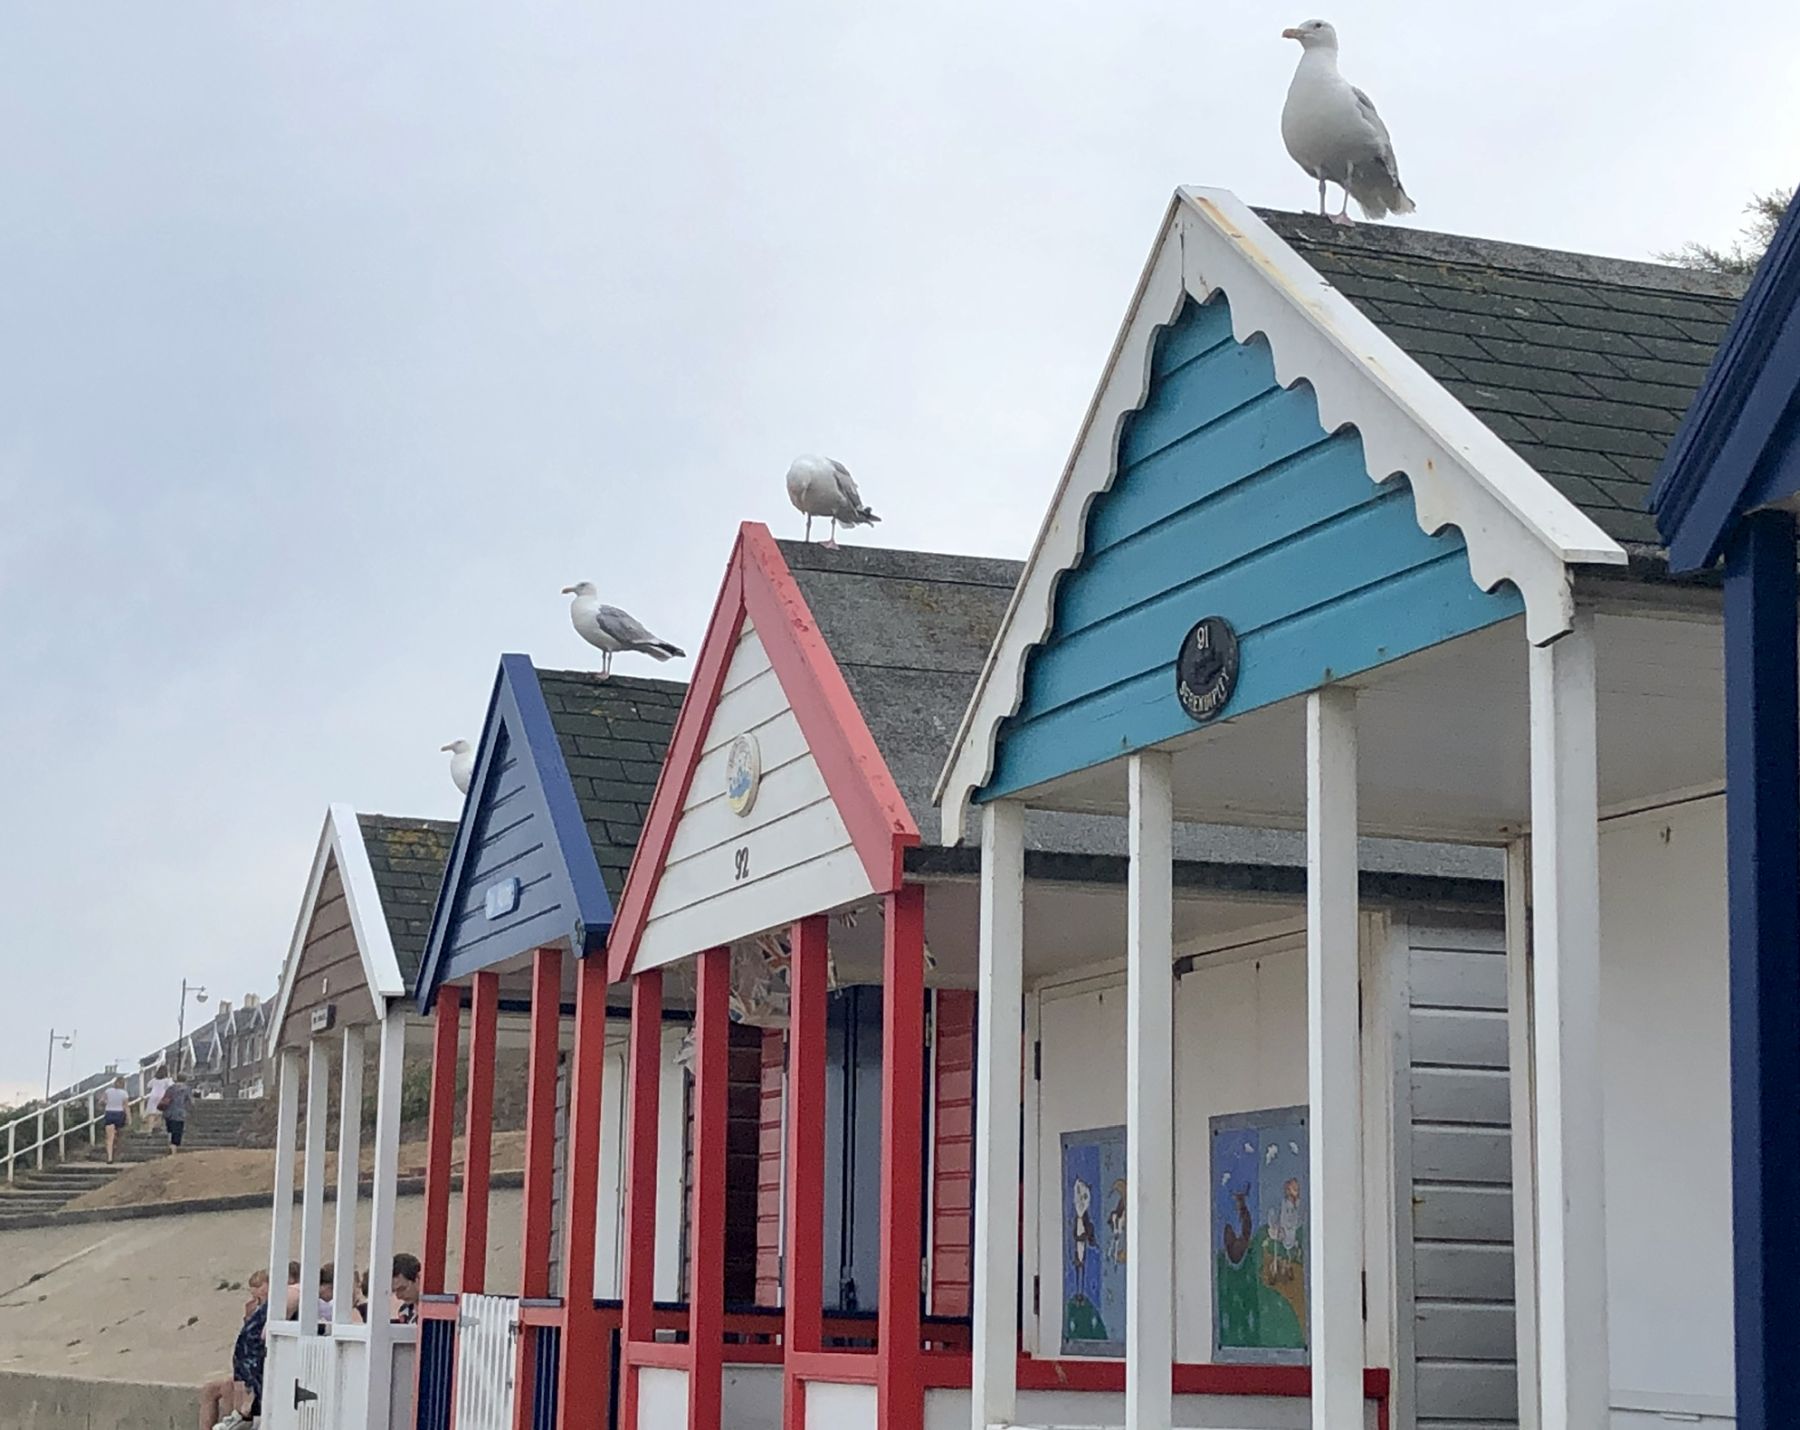 Seagulls on parade on North Parade beach huts